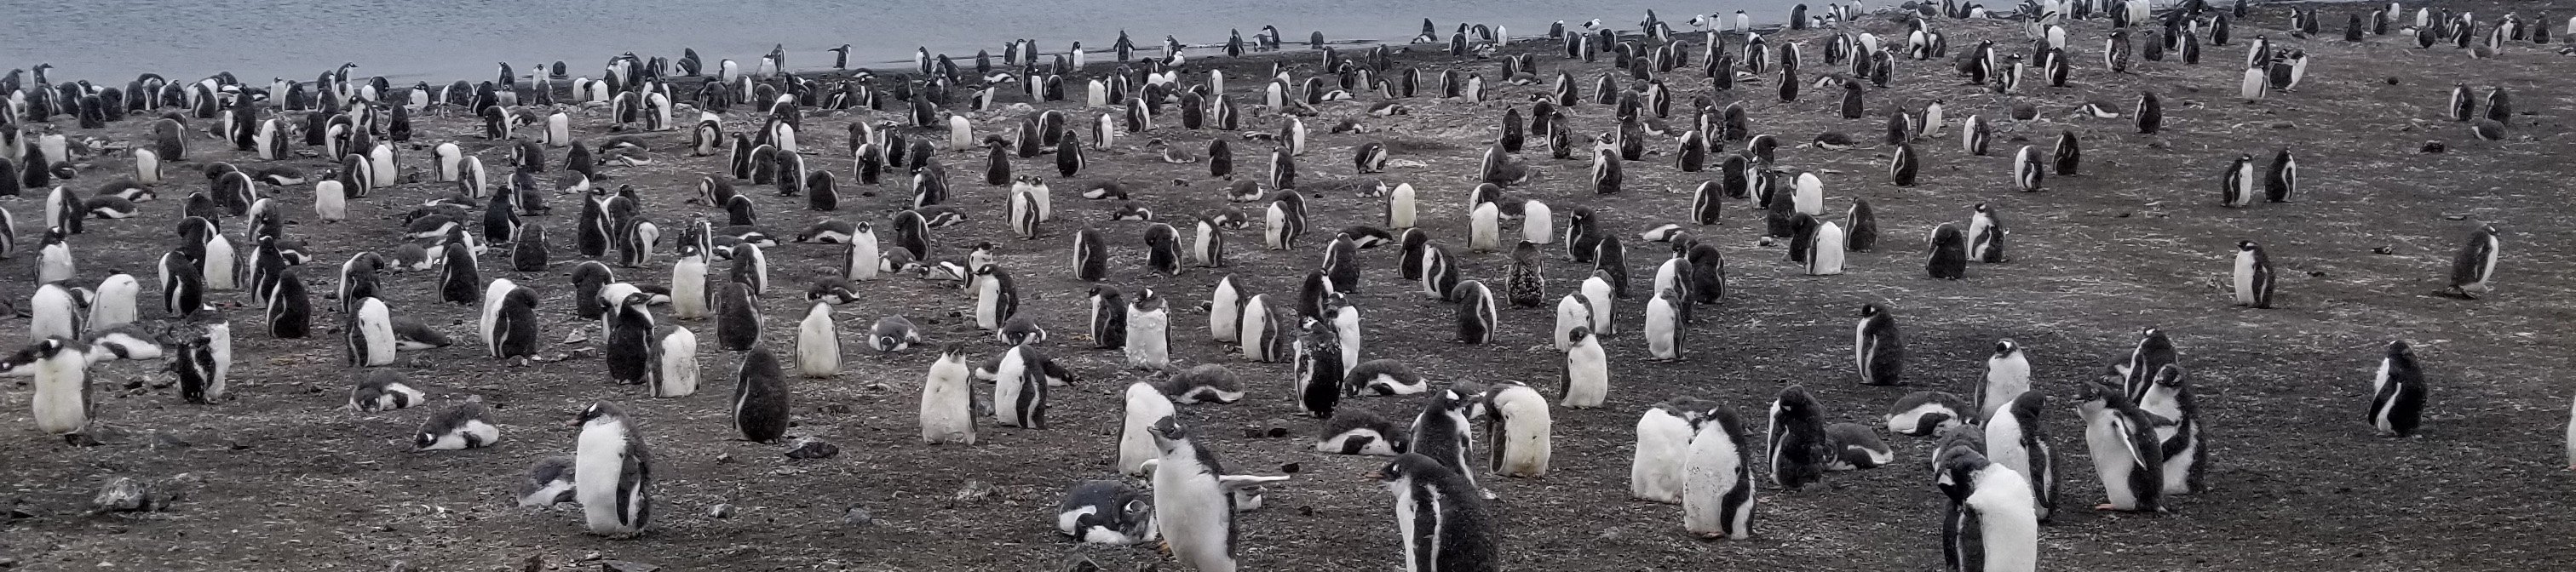 Landing at Barrientos Island - Penguins